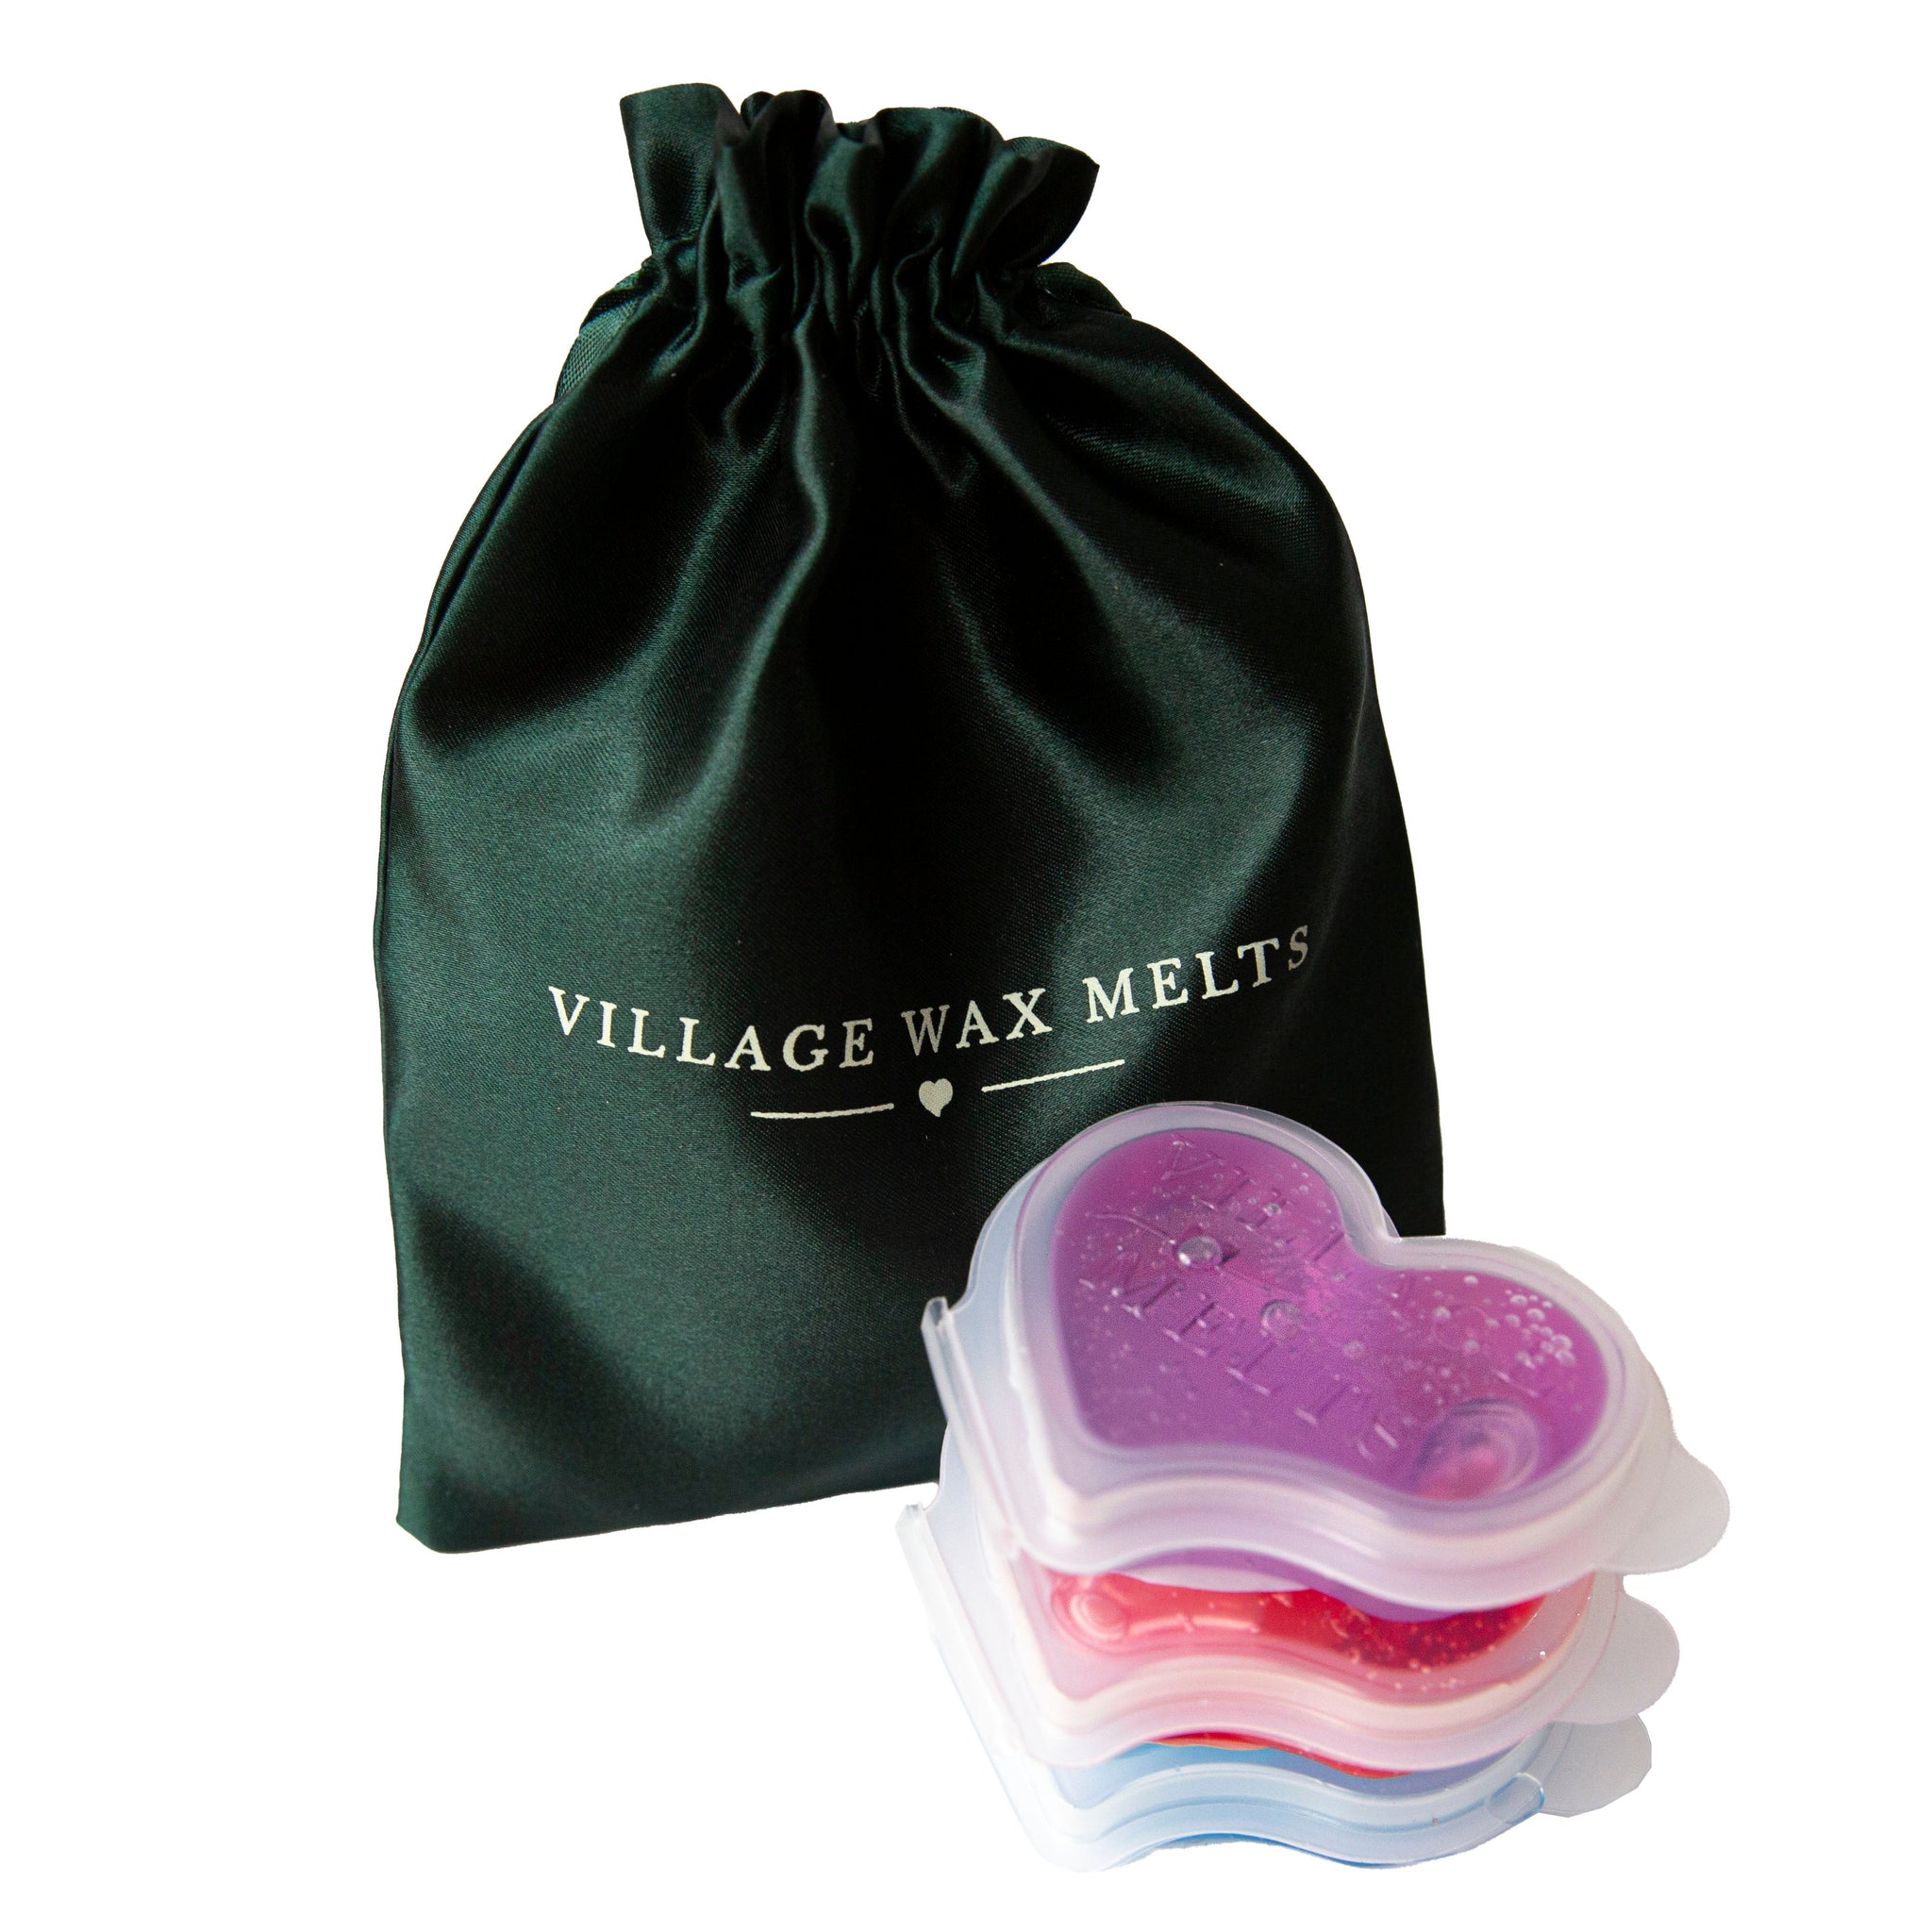 XL gel wax melts are here 😱✨ - Village Wax Melts